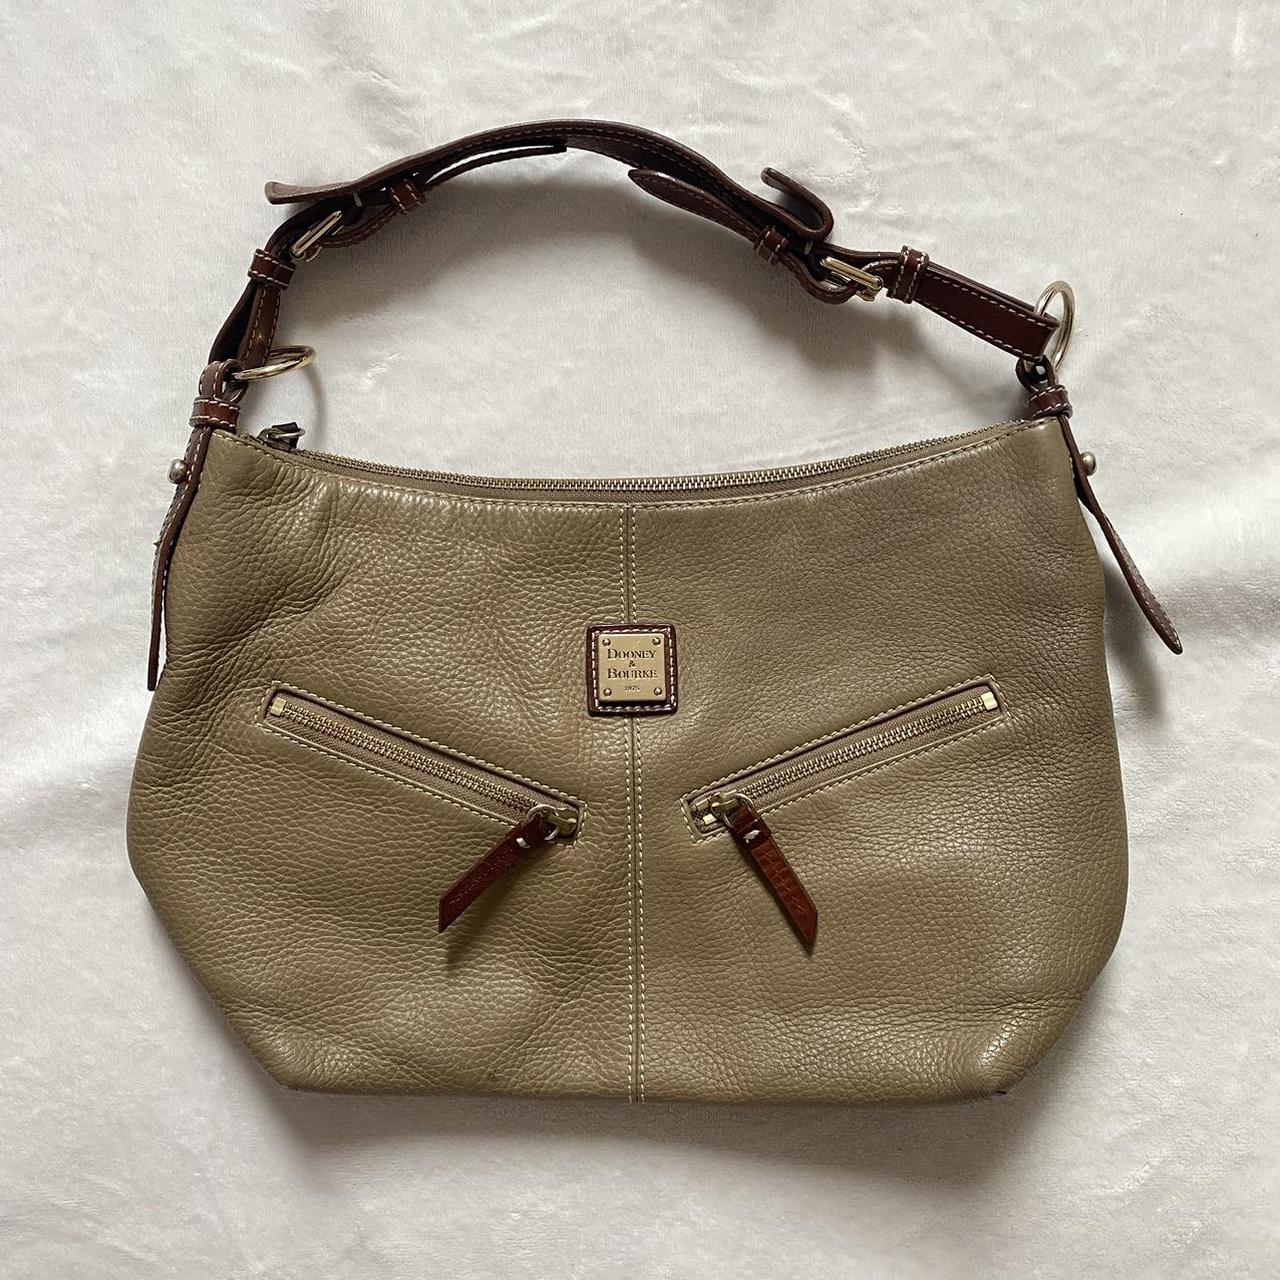  Dooney & Bourke Handbag, Saffiano Hobo Shoulder Bag